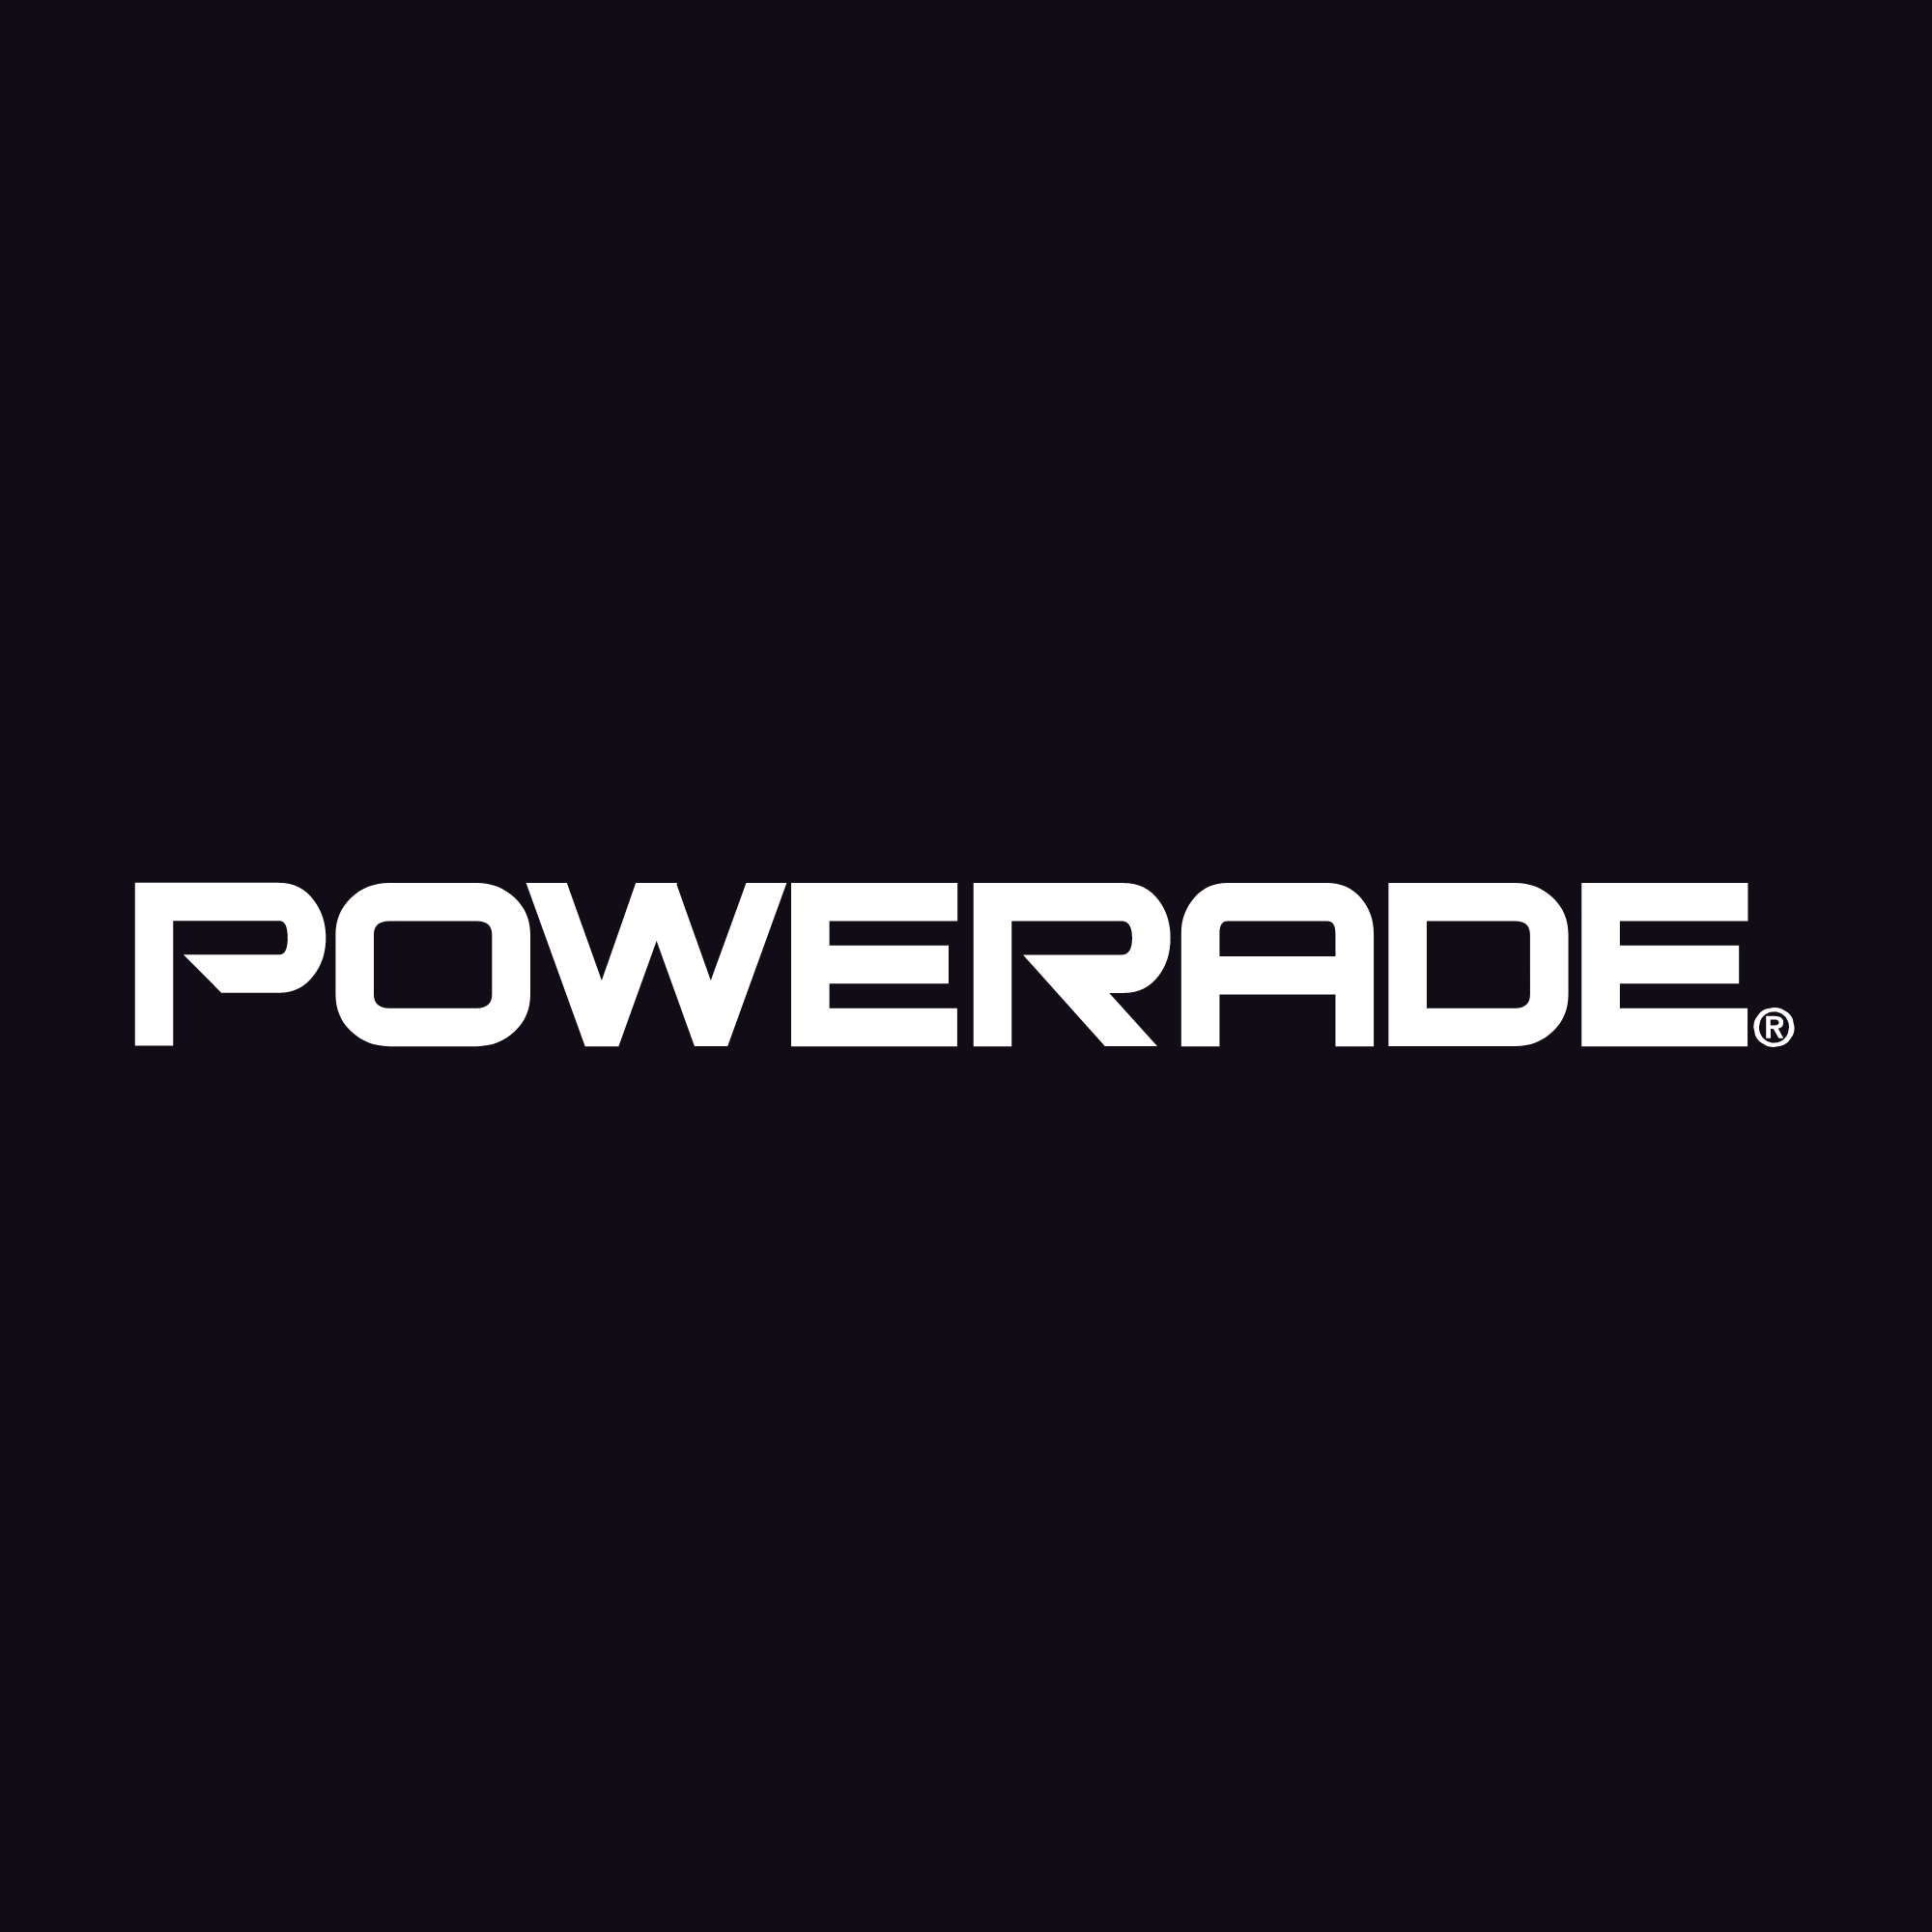 Powerade-logo